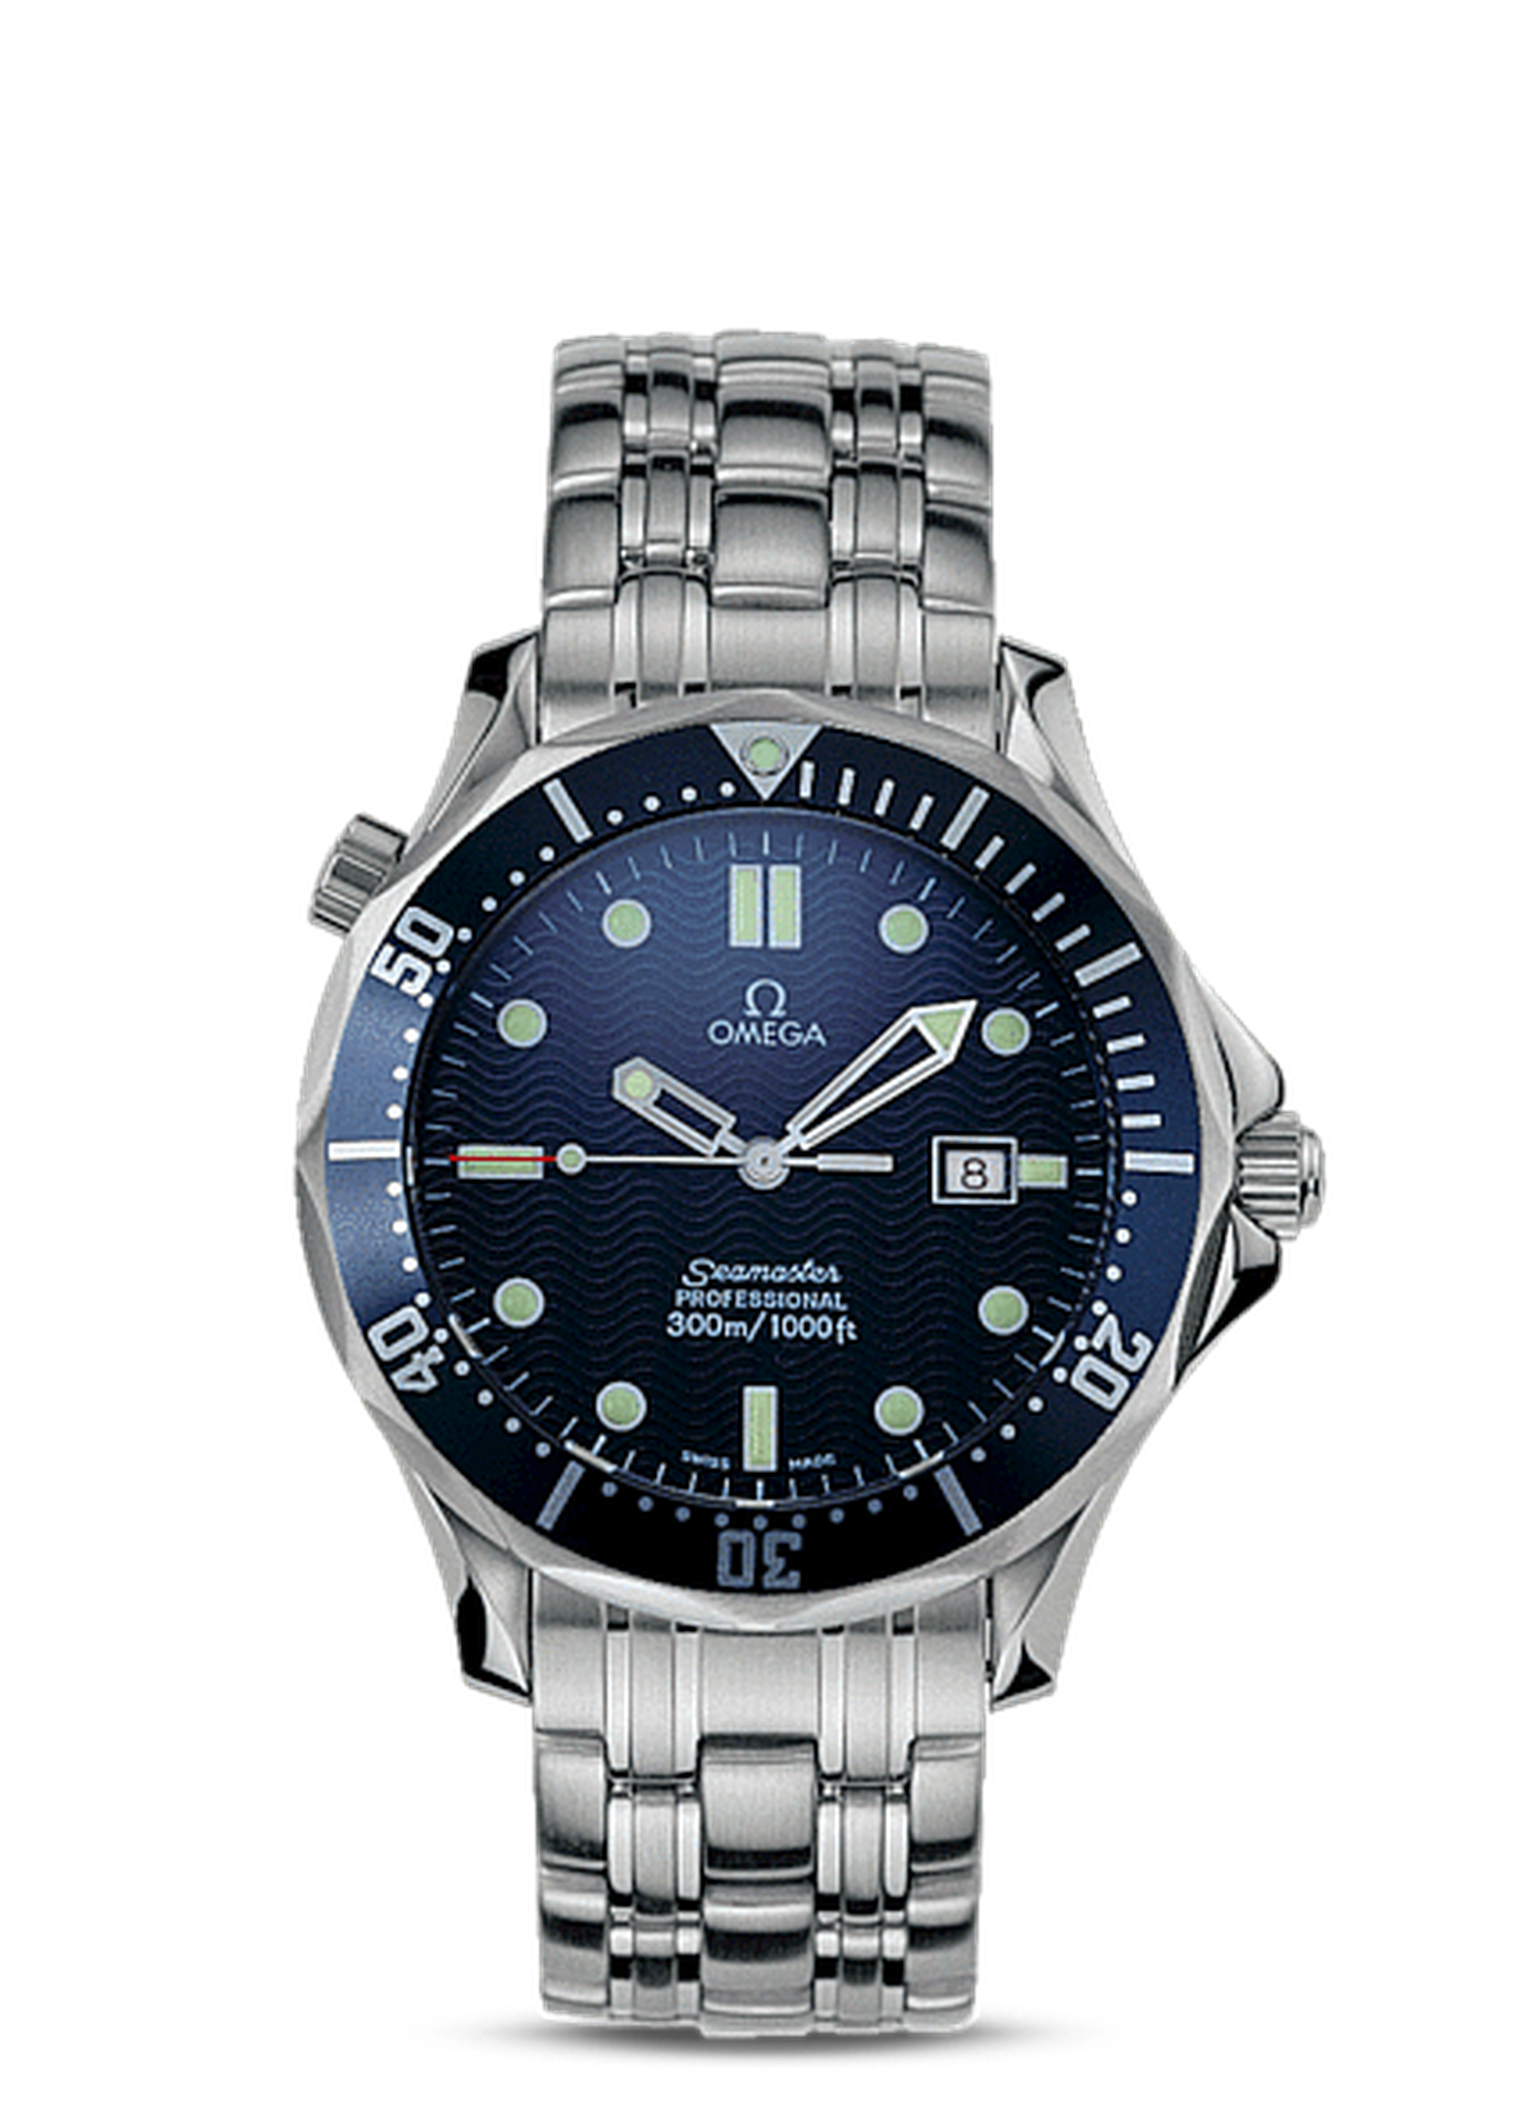 The Omega Seamaster 300m quartz watch that was first seen on Pierce Brosnan as 007 in GoldenEye.